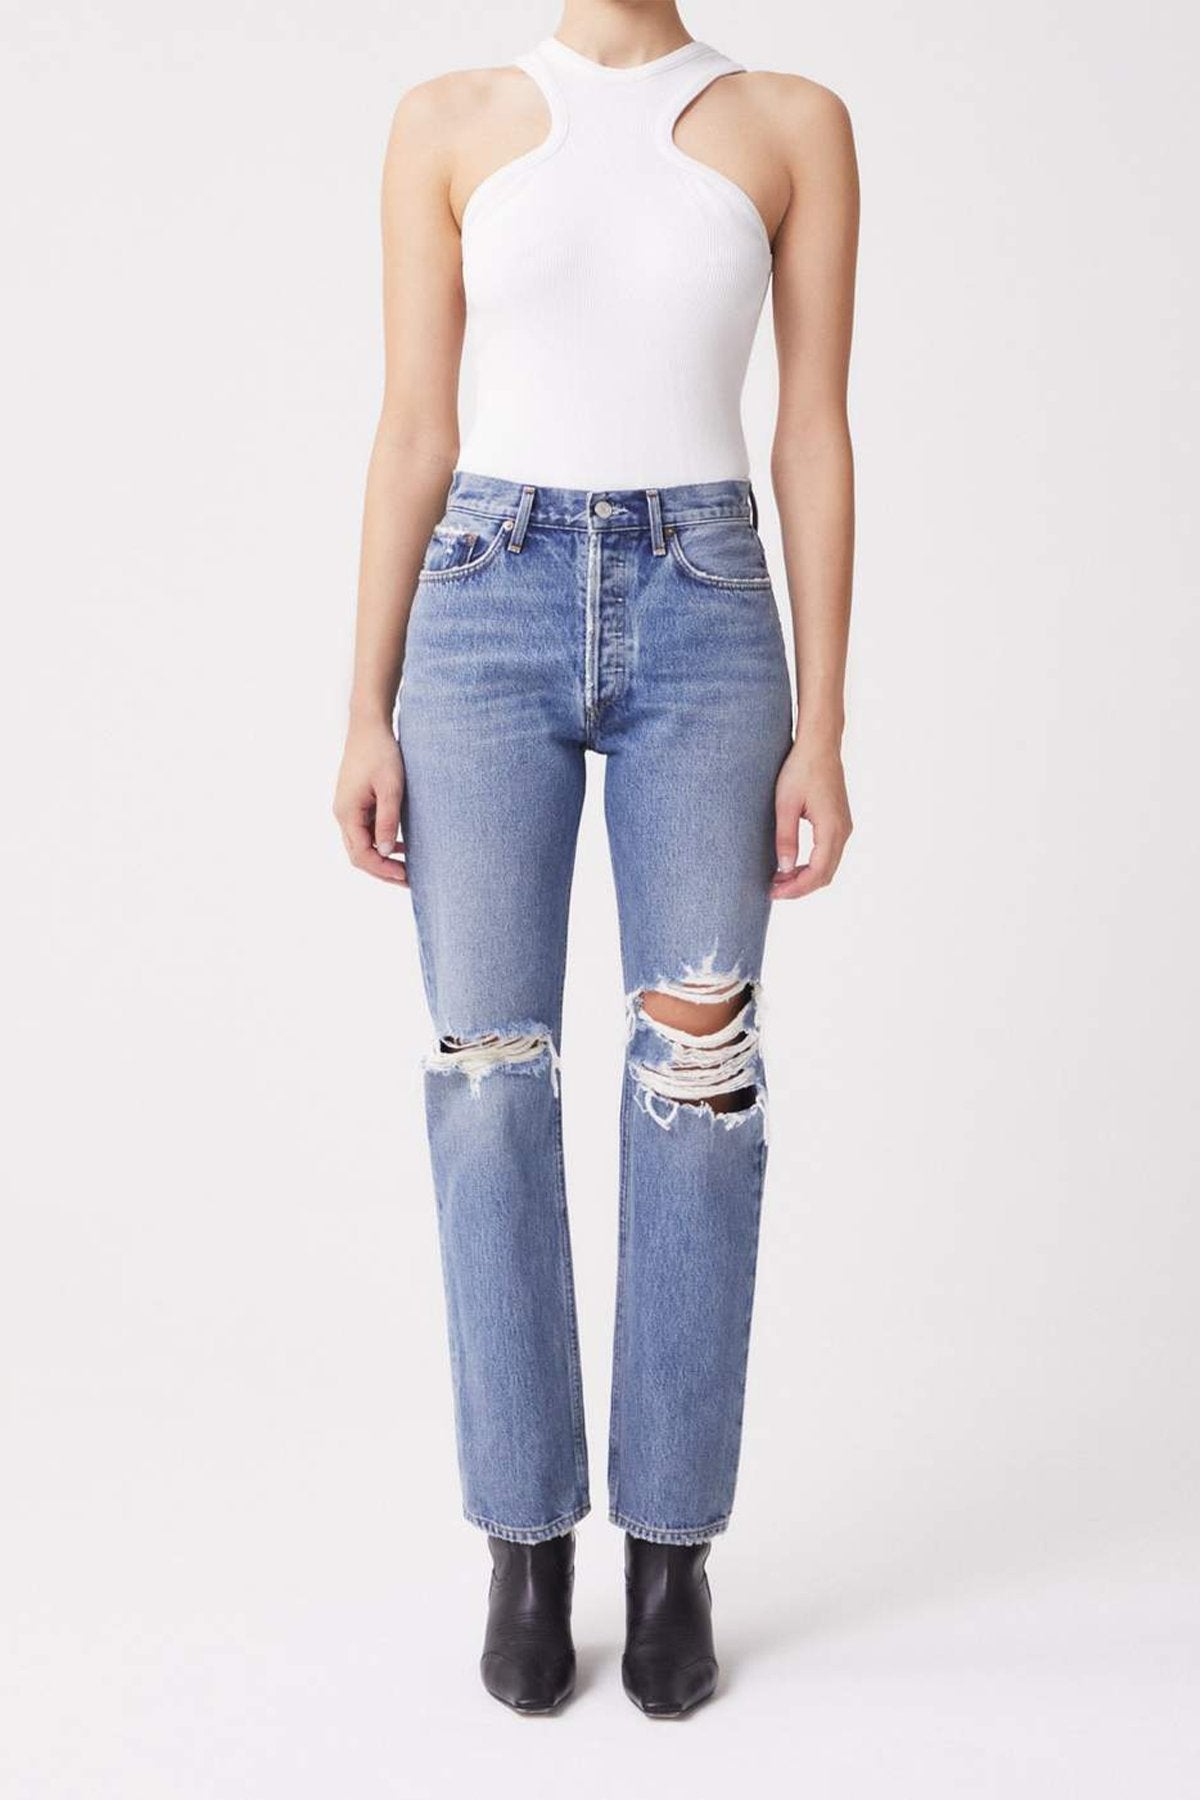 Lana Mid Rise Full Length Straight Jean in Backdrop - shop-olivia.com